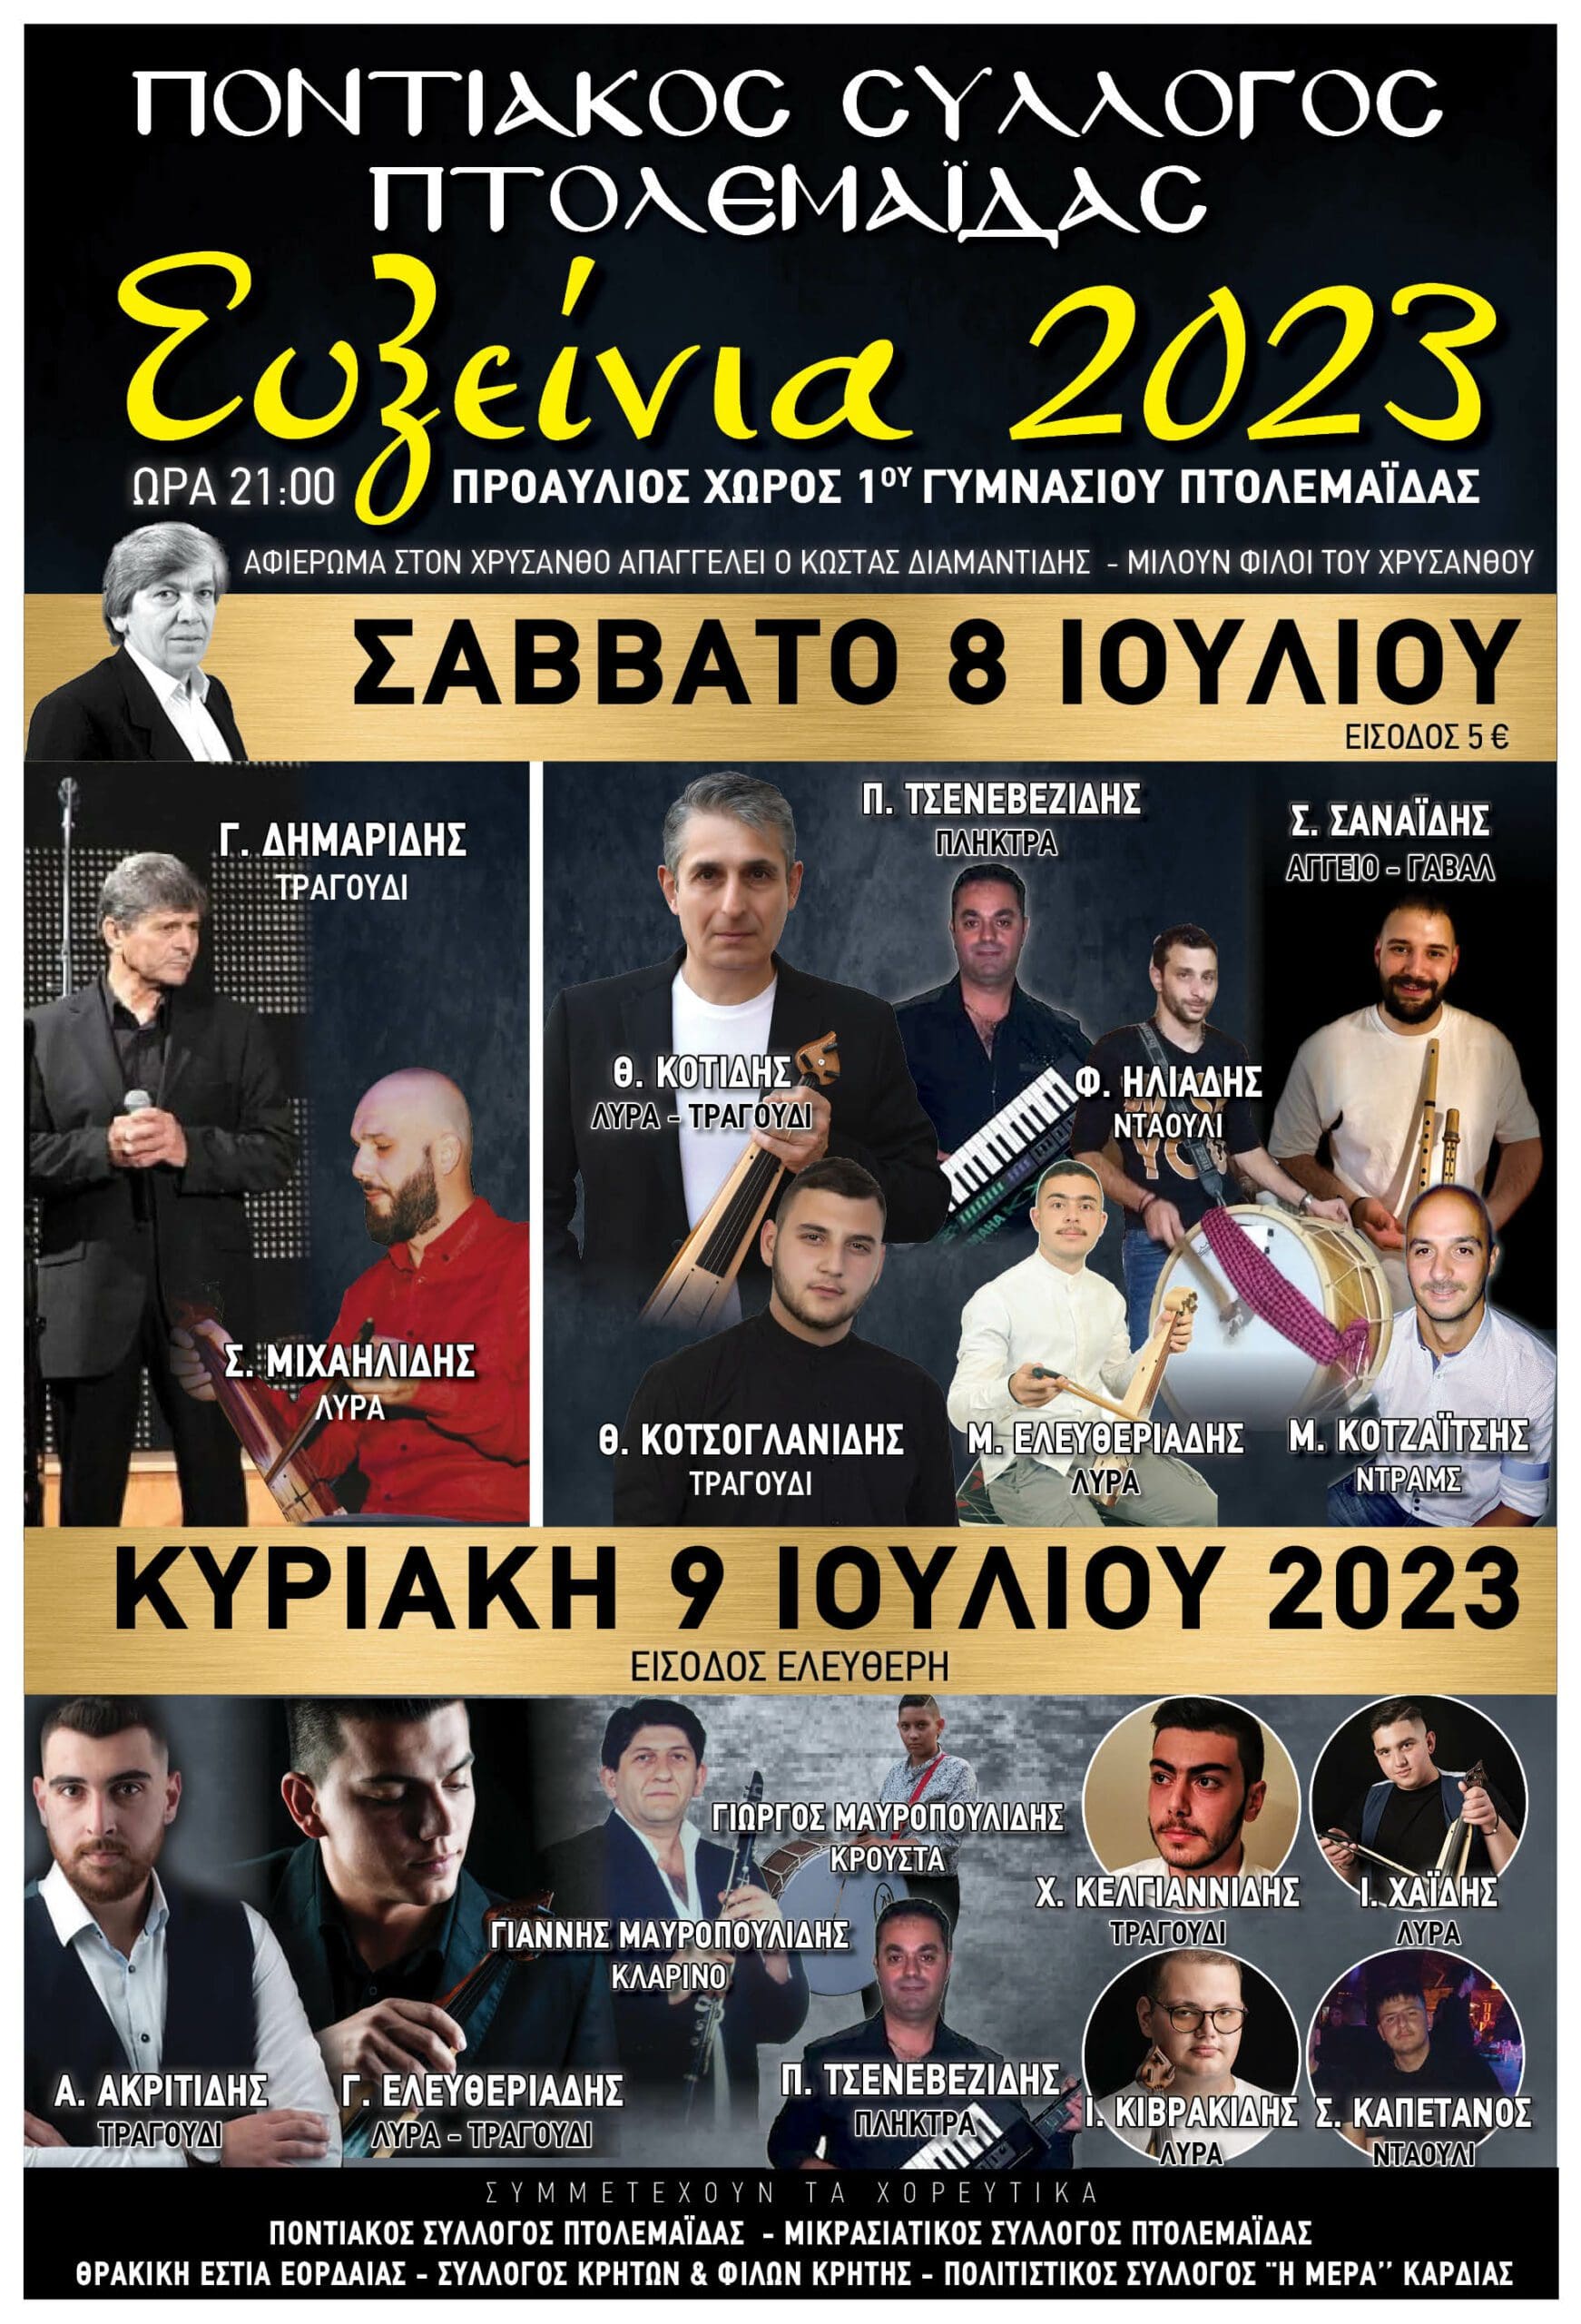 Eordaialive.com - Τα Νέα της Πτολεμαΐδας, Εορδαίας, Κοζάνης ΕΥΞΕΙΝΙΑ 2023- ΠΟΝΤΙΑΚΟΣ ΣΥΛΛΟΓΟΣ ΠΤΟΛΕΜΑΪΔΑΣ: Ποντιακό θέατρο, αφιέρωμα στον Χρύσανθο και πλούσιο μουσικοχορευτικό  πρόγραμμα, στις  1-2 και 8-9 Ιουλίου